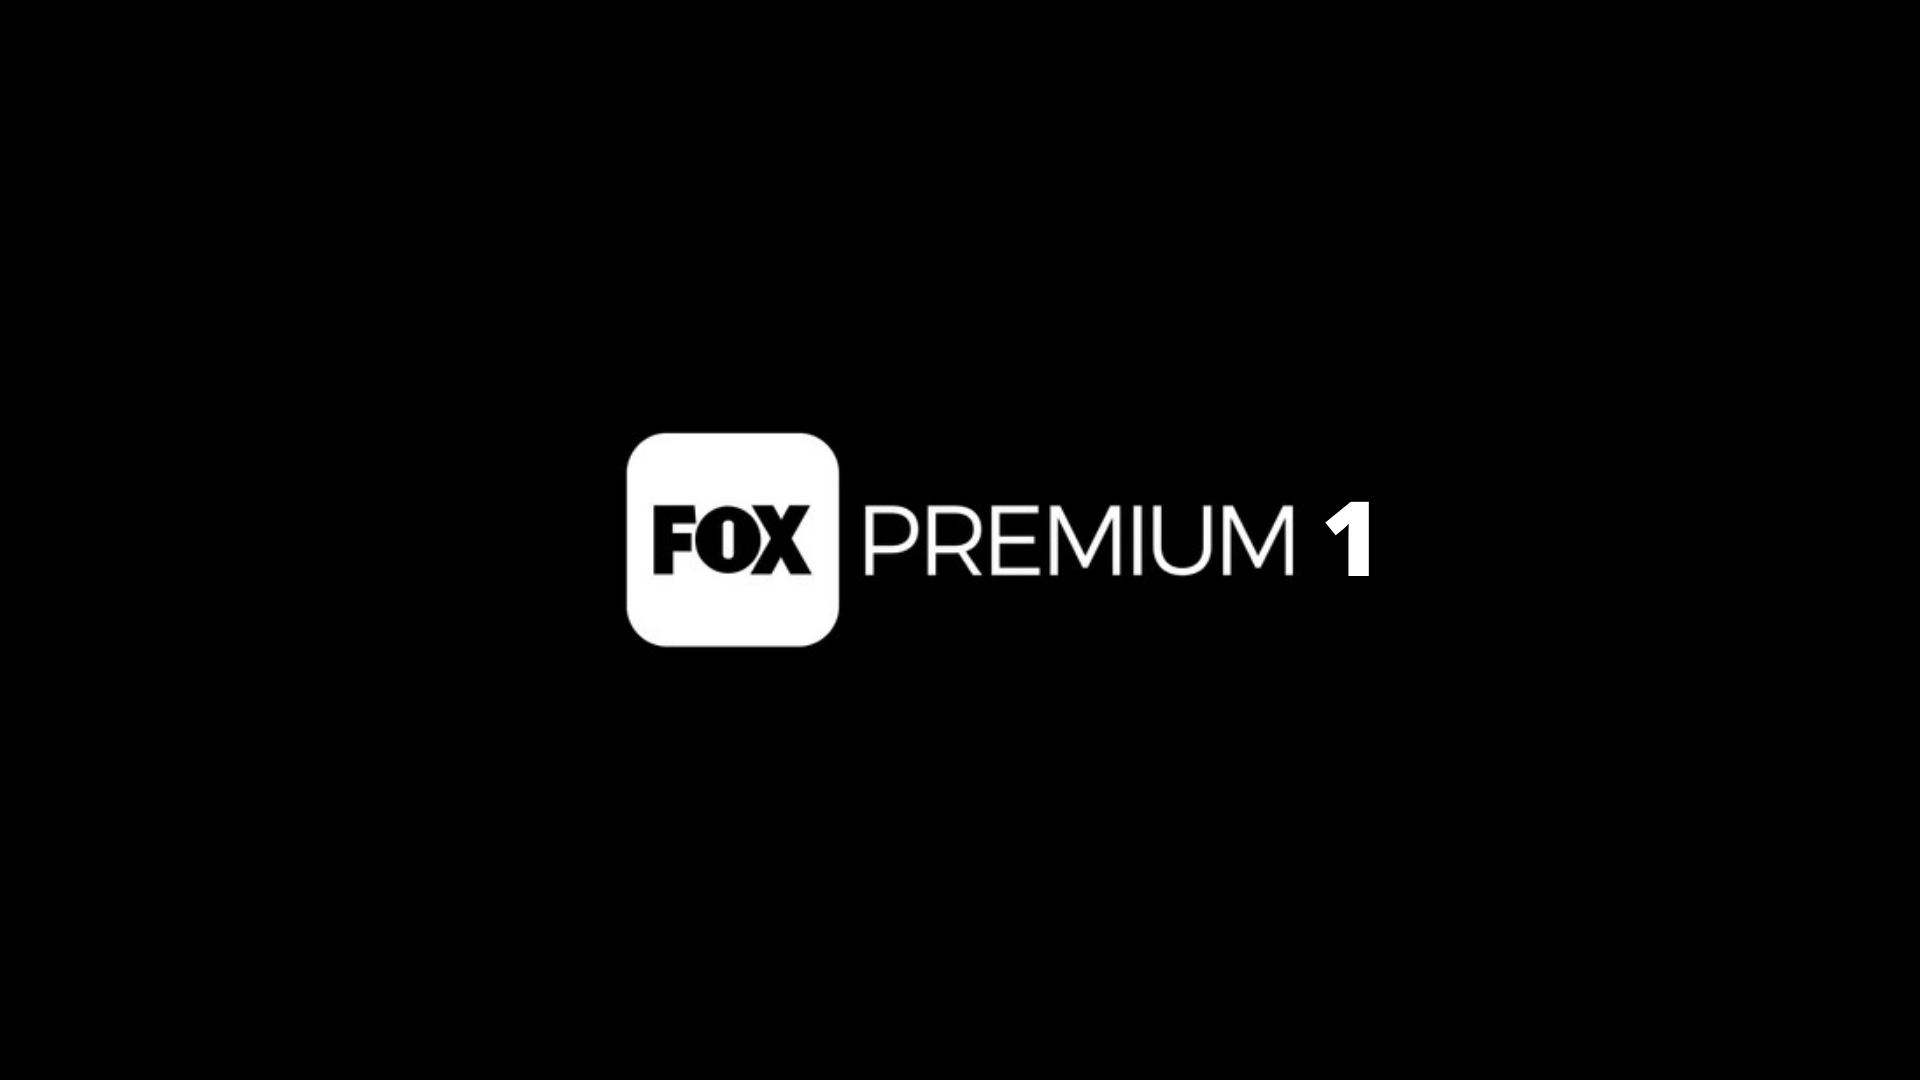 Fox Premium ao vivo,Fox Premium online,assistir Fox Premium,assistir Fox Premium ao vivo,assistir Fox Premium online,Fox Premium gratis,assistir Fox Premium gratis,ao vivo online,ao vivo gratis,ver Fox Premium,ver Fox Premium ao vivo,ver Fox Premium online,24 horas,24h,multicanais,piratetv,piratatvs.com